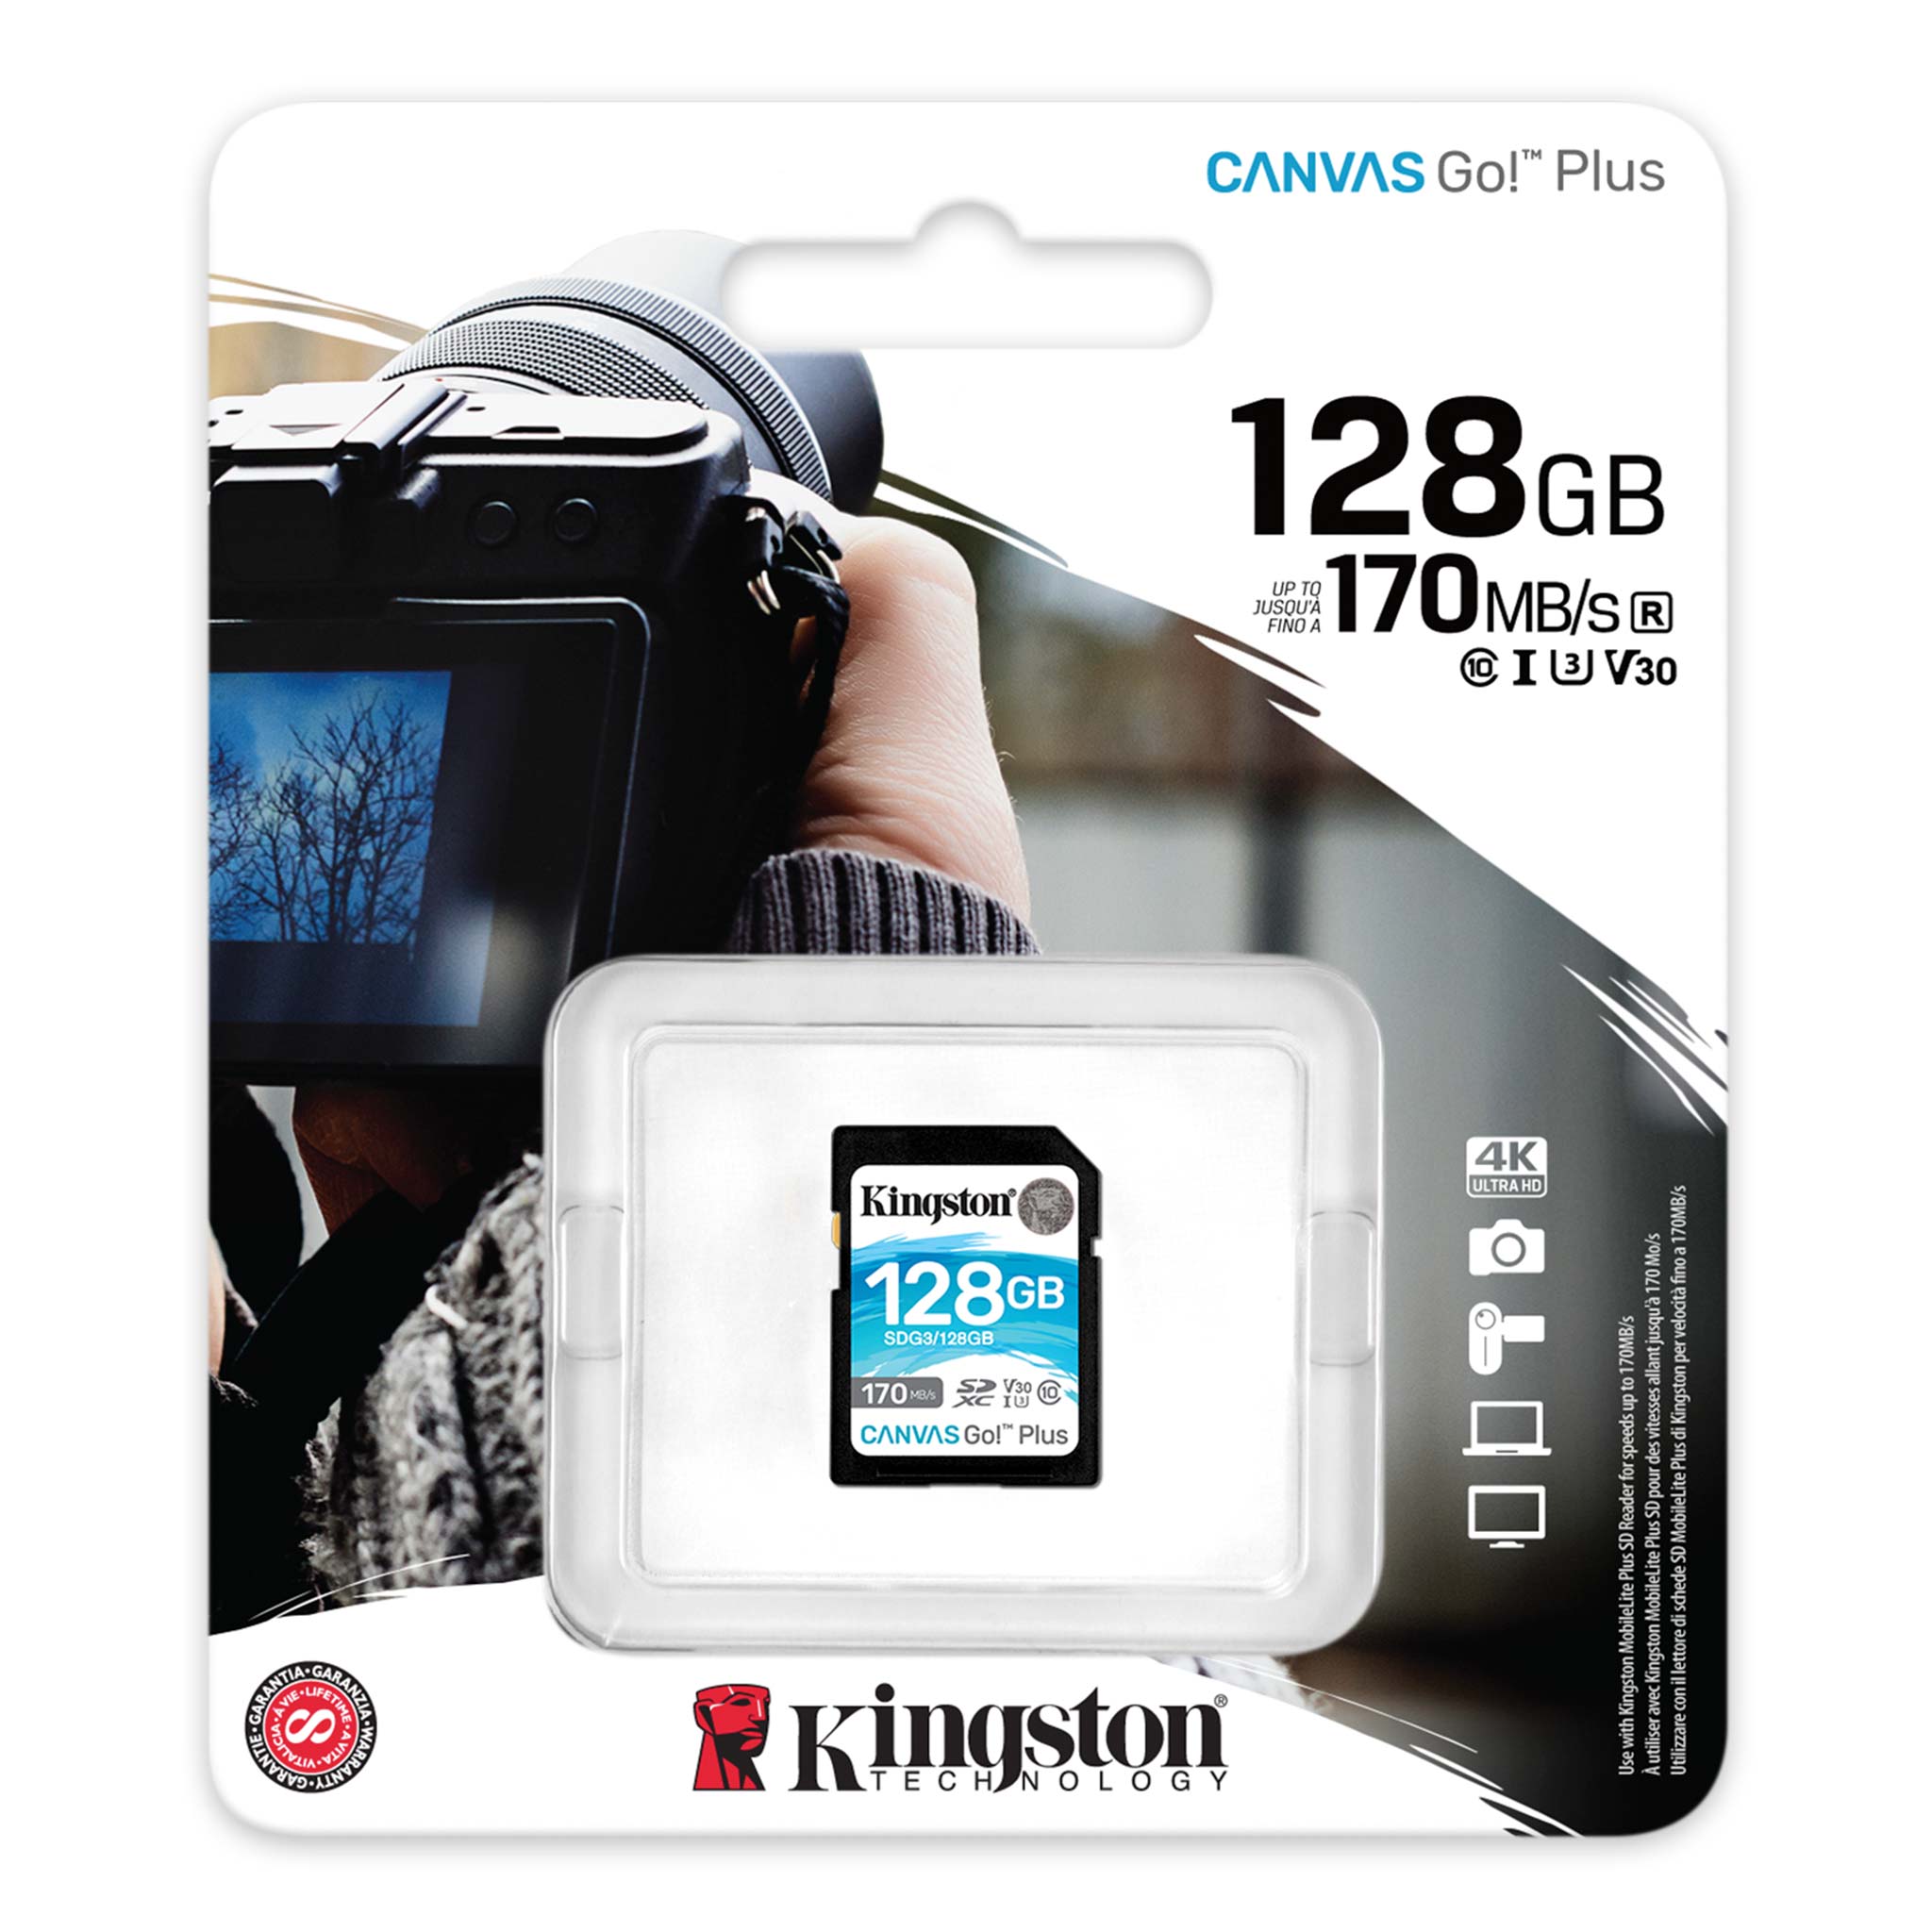 MicroSDXC Canvas Select Plus Card Verified by SanFlash. 100MBs Works with Kingston 5th Gen. Kingston 512GB Motorola Moto G